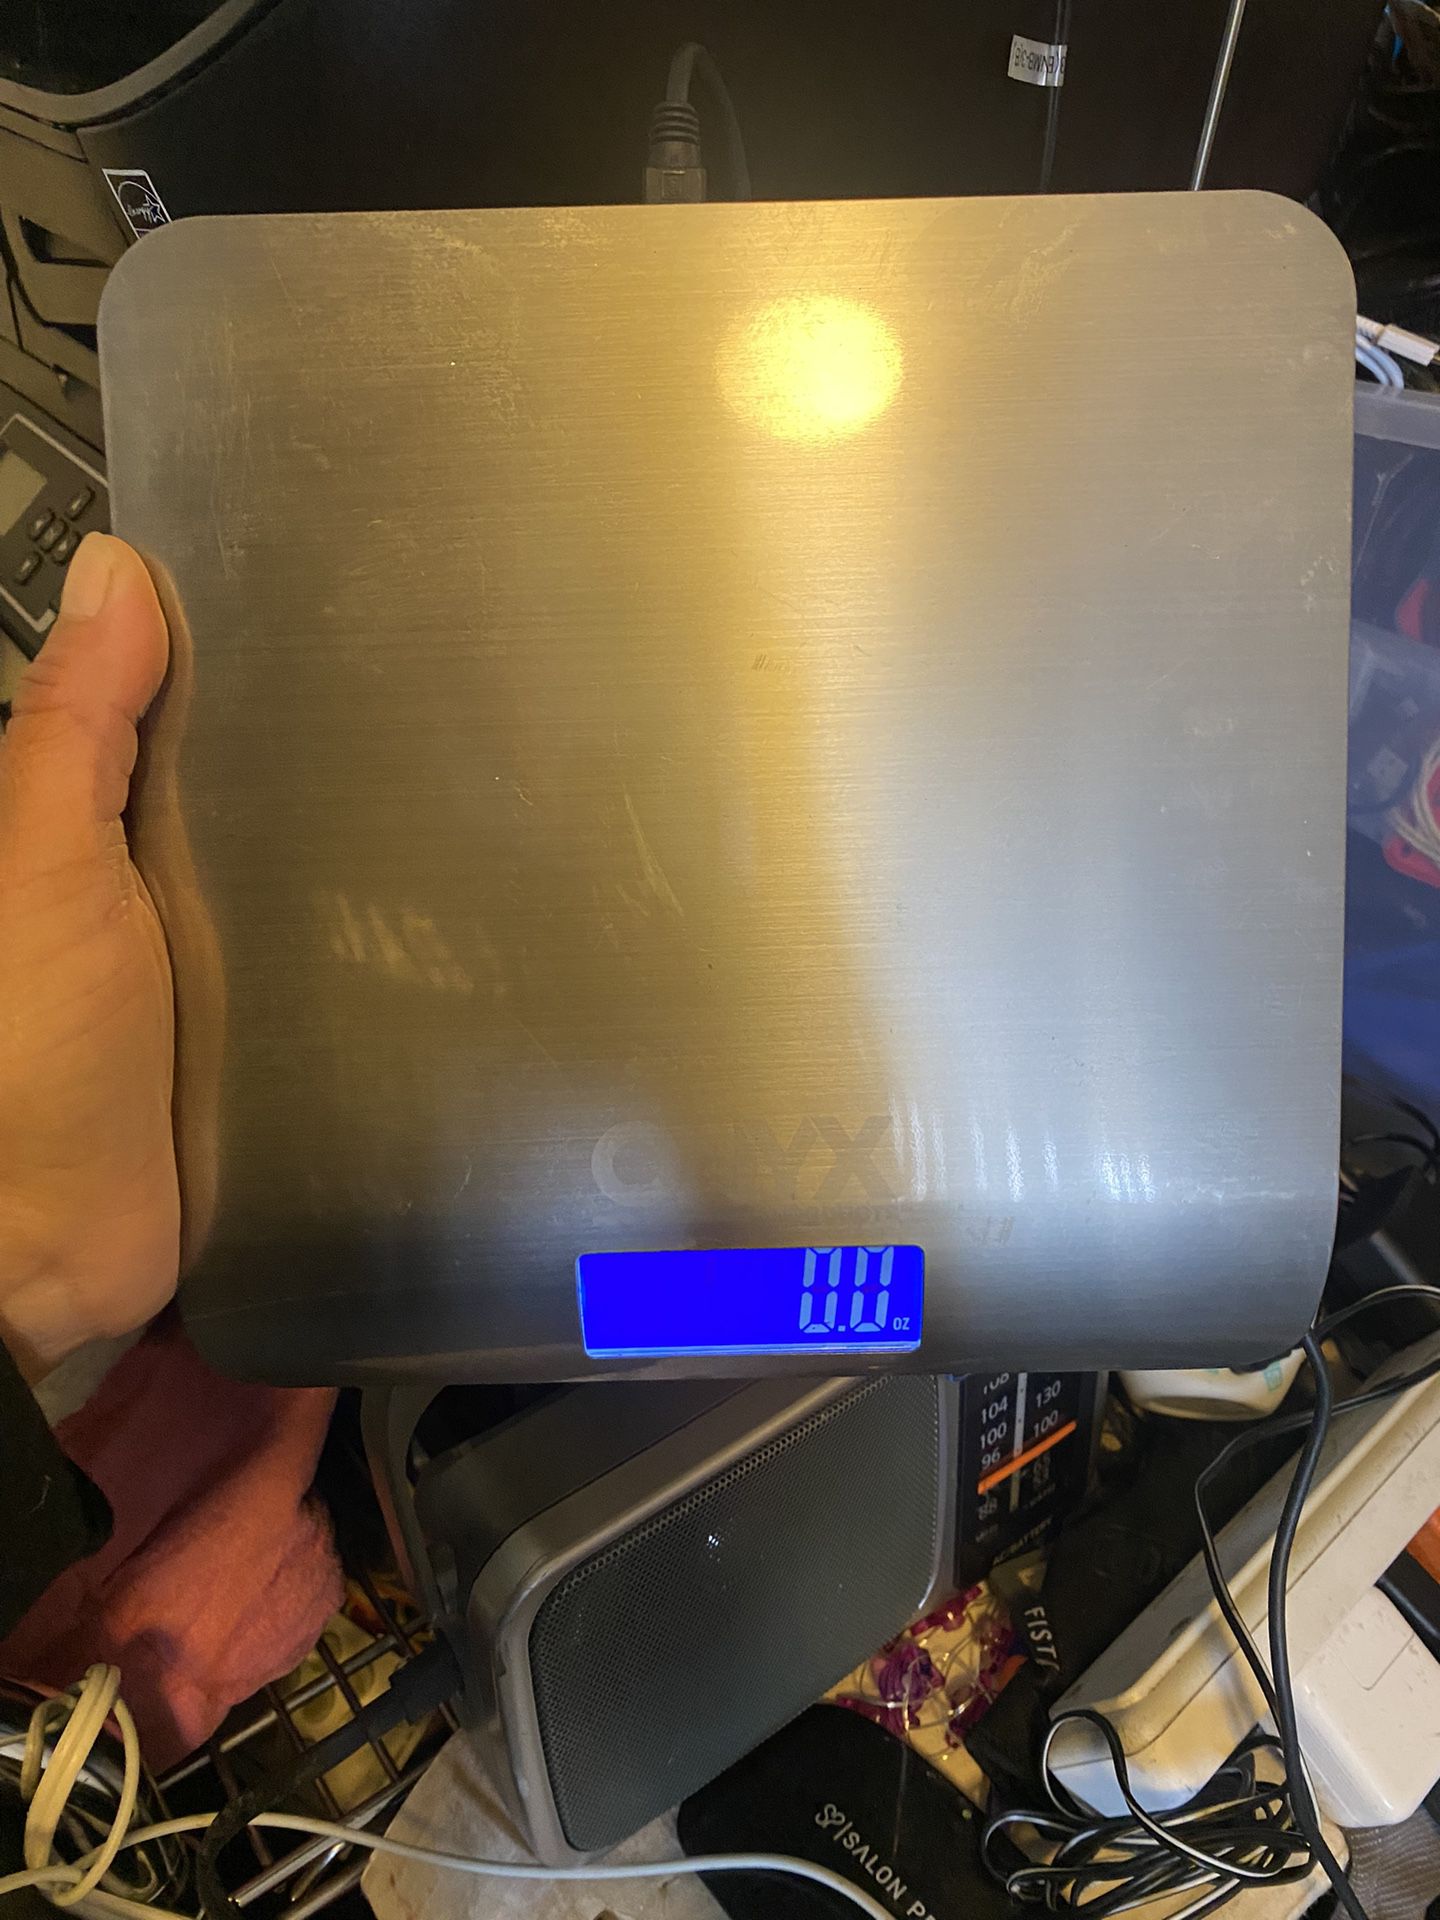 ONYX Digital Kitchen scale max 5lb